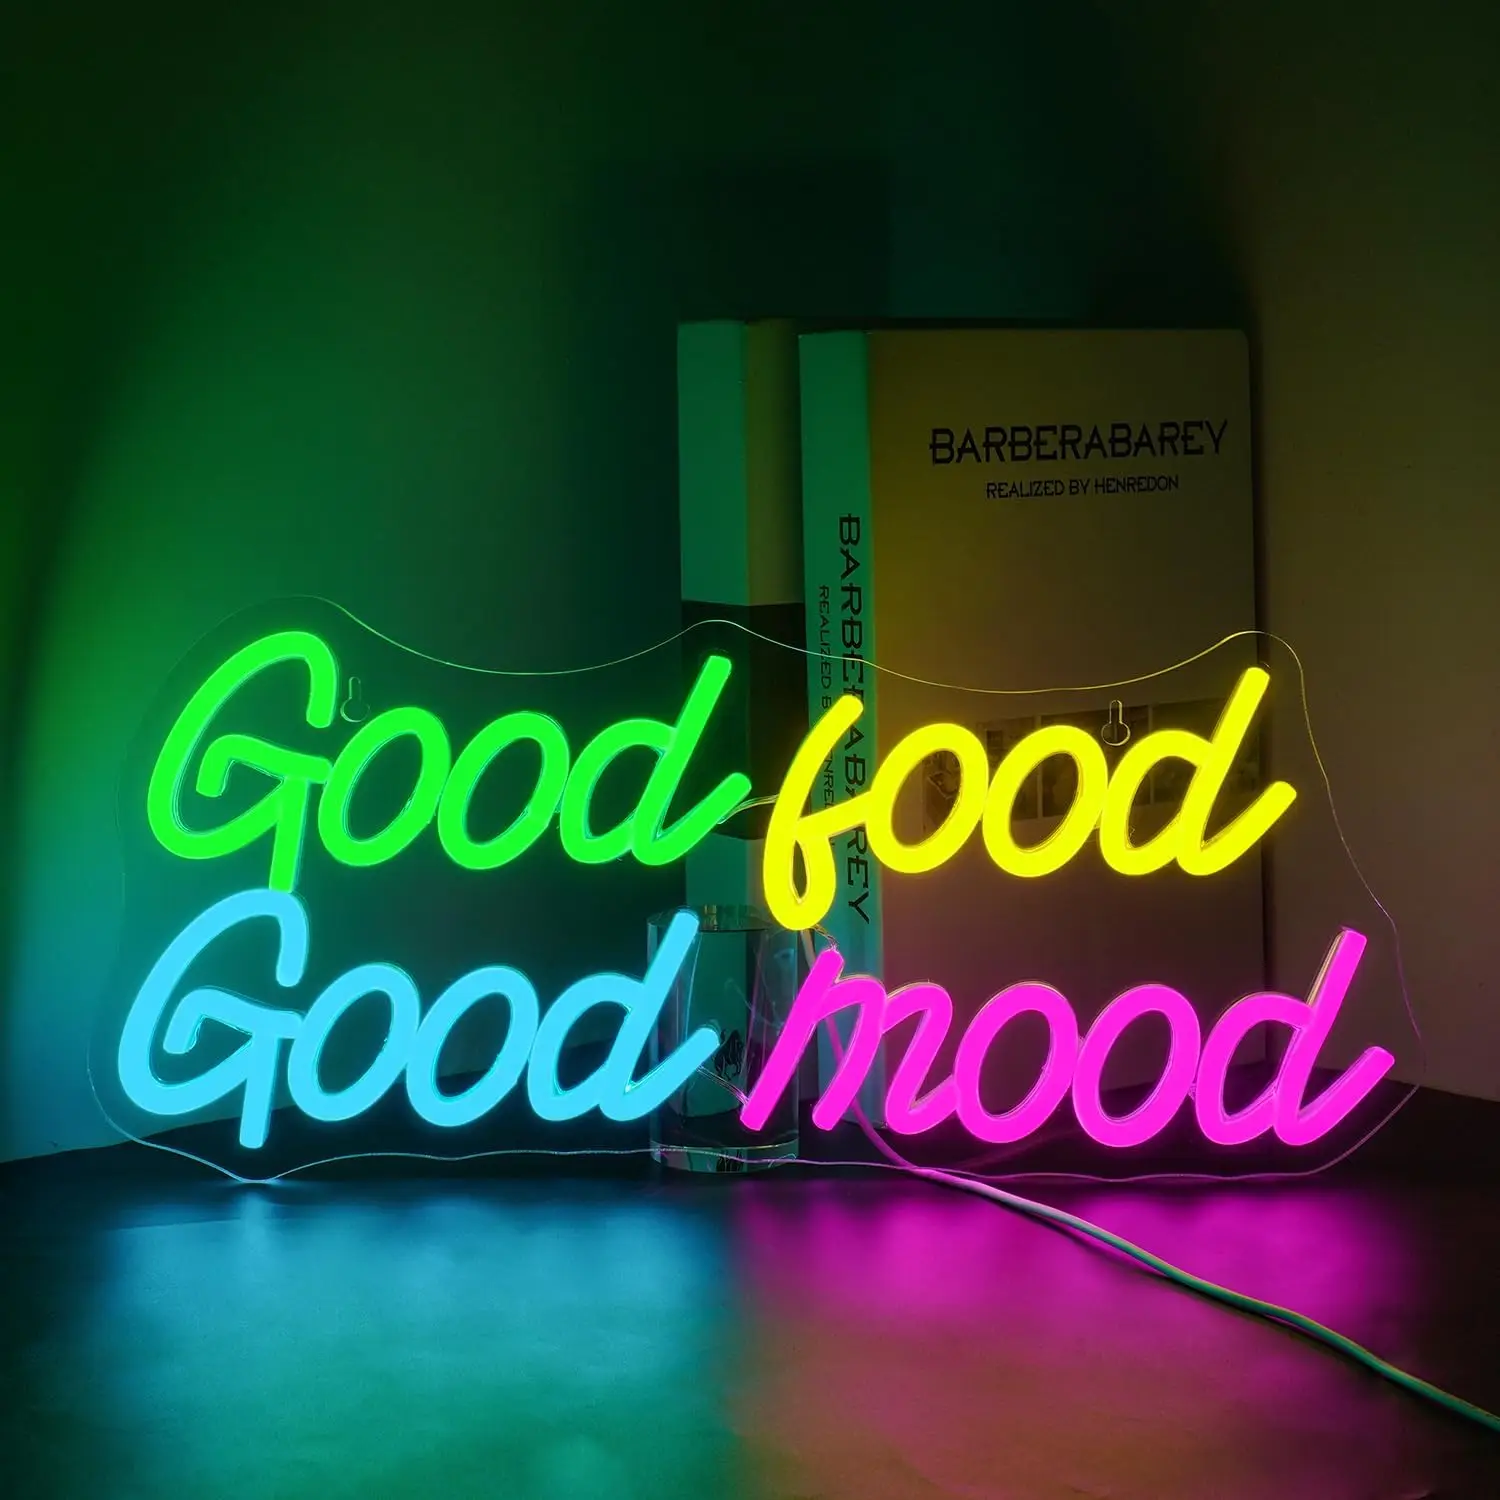 

Good Food Good Mood Neon Sign Colorful Led Lights Dimmable Light Up Sign For Restaurant Kitchen Dessert Cafe Shop Signboard Lamp